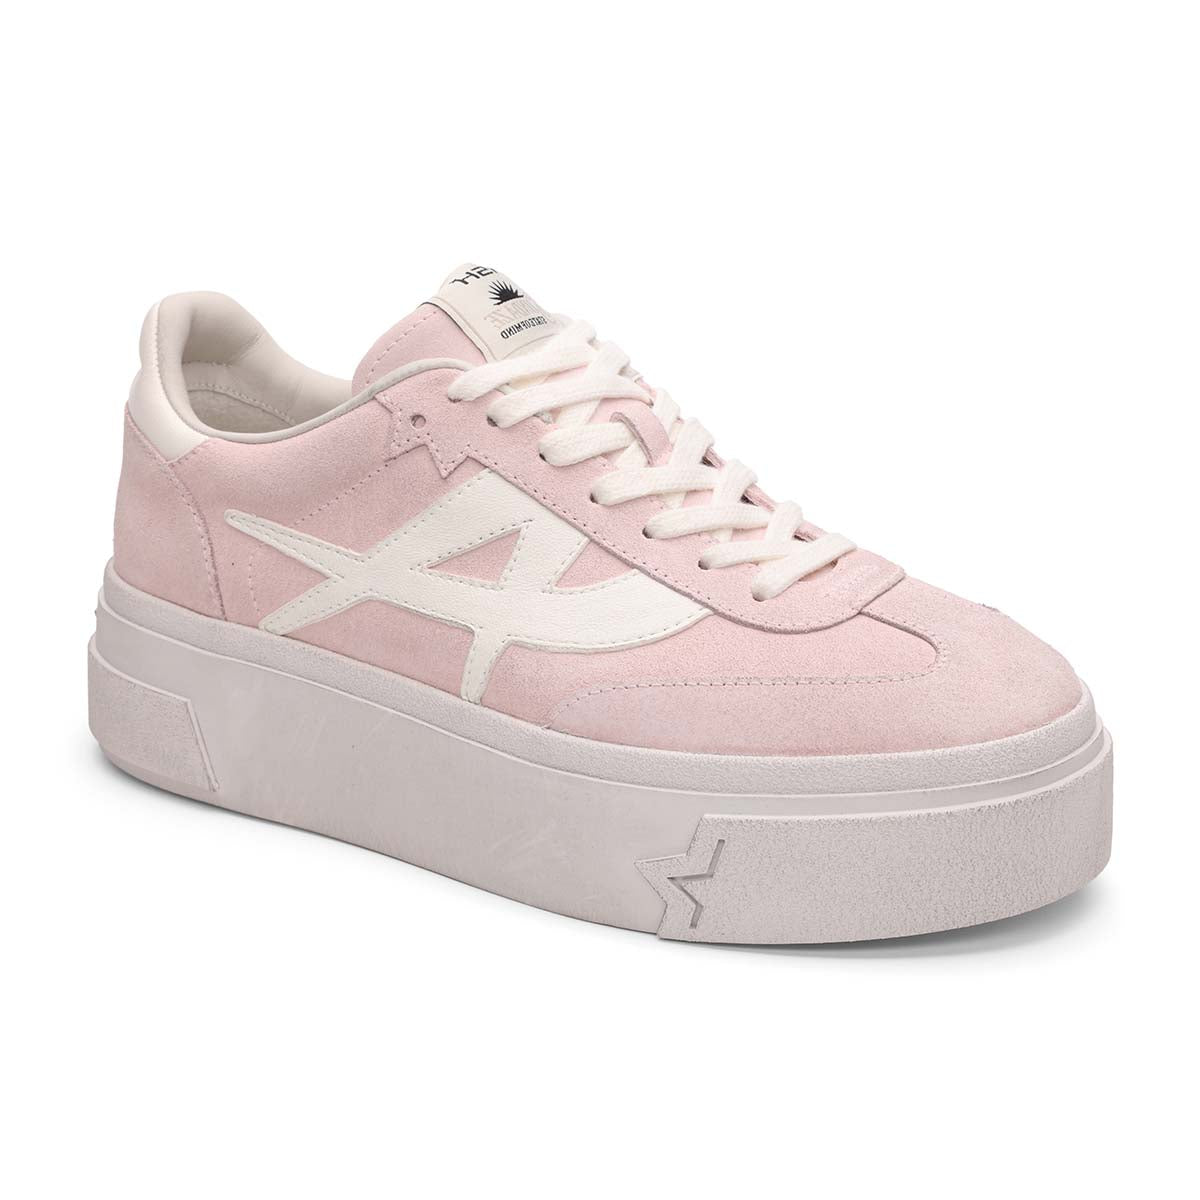 Starmoon Suede Platform Sneakers - Pink/White - ASH